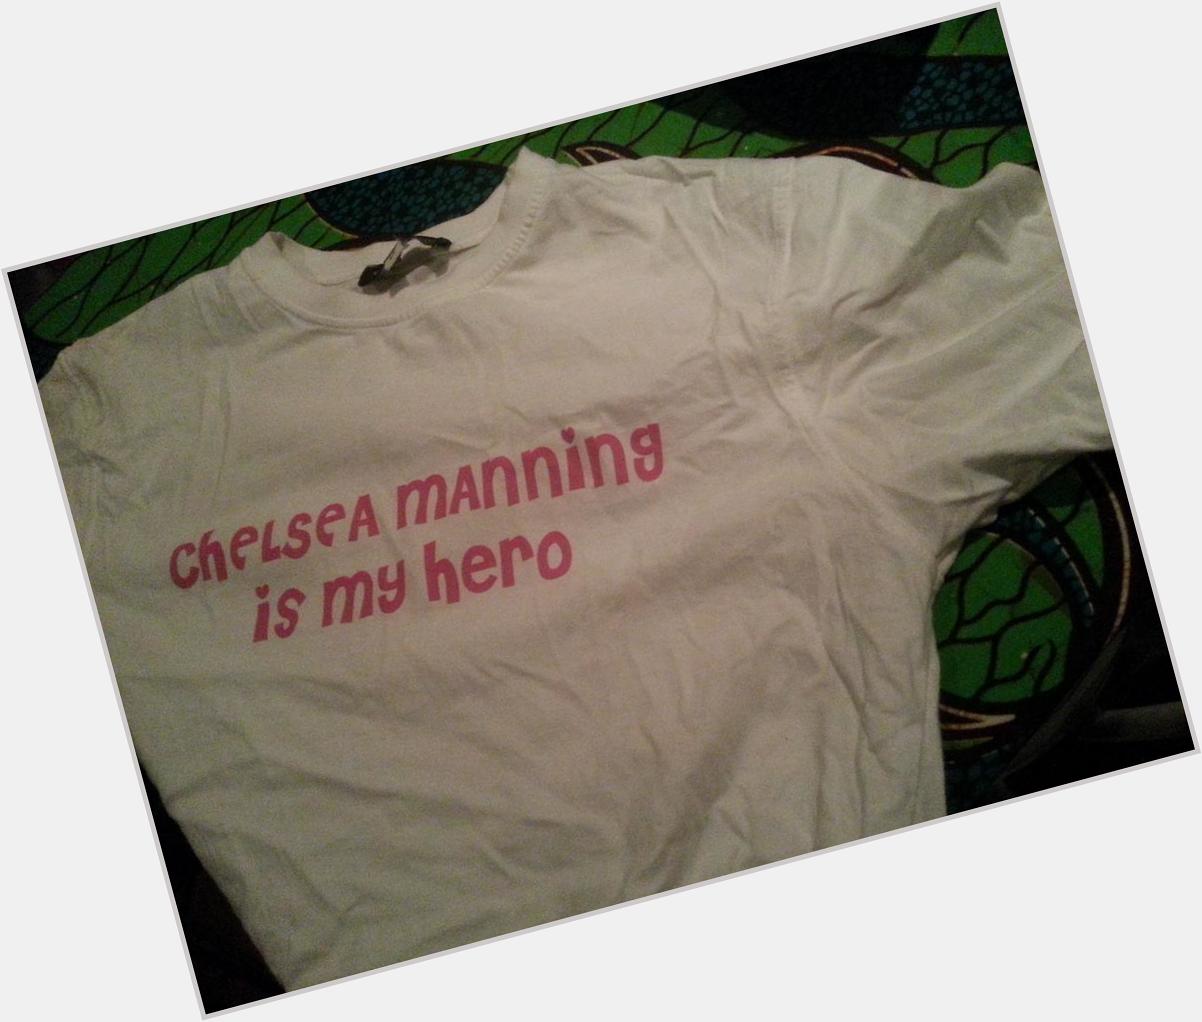 My favourite t shirt: "Chelsea Manning is my hero". Happy birthday 